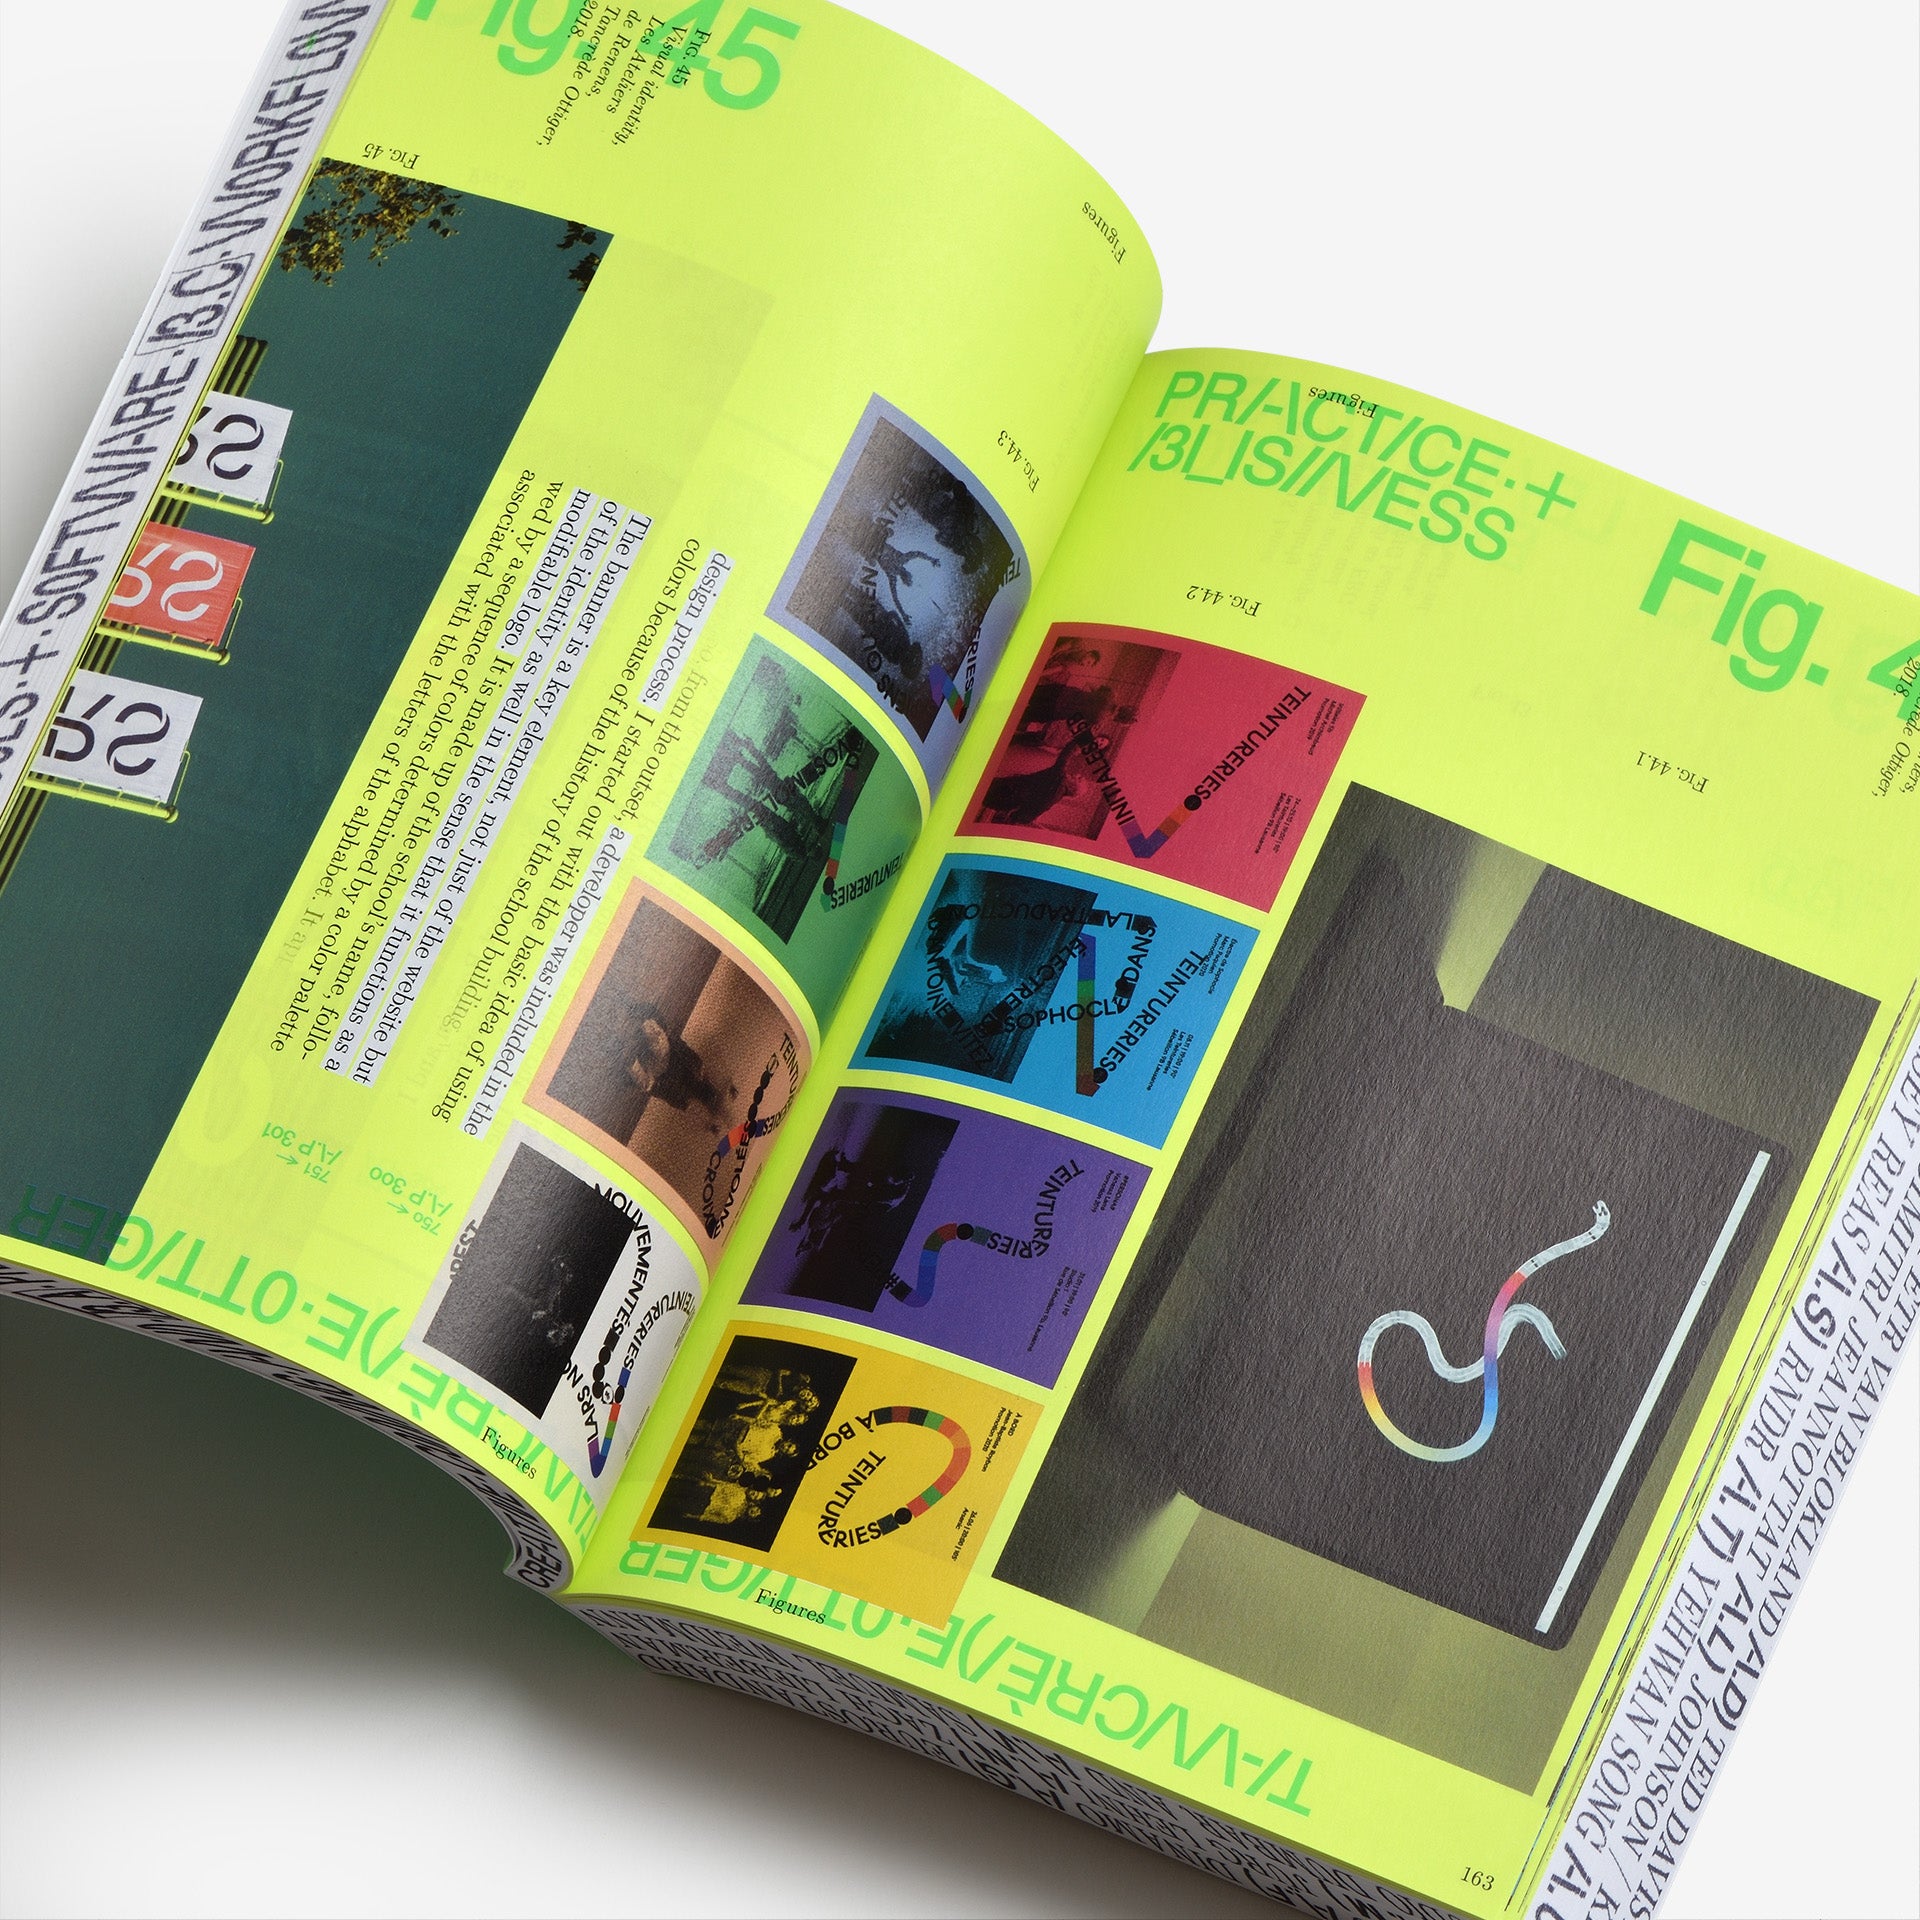 Graphic Design in the Post-Digital Age (Reprint)